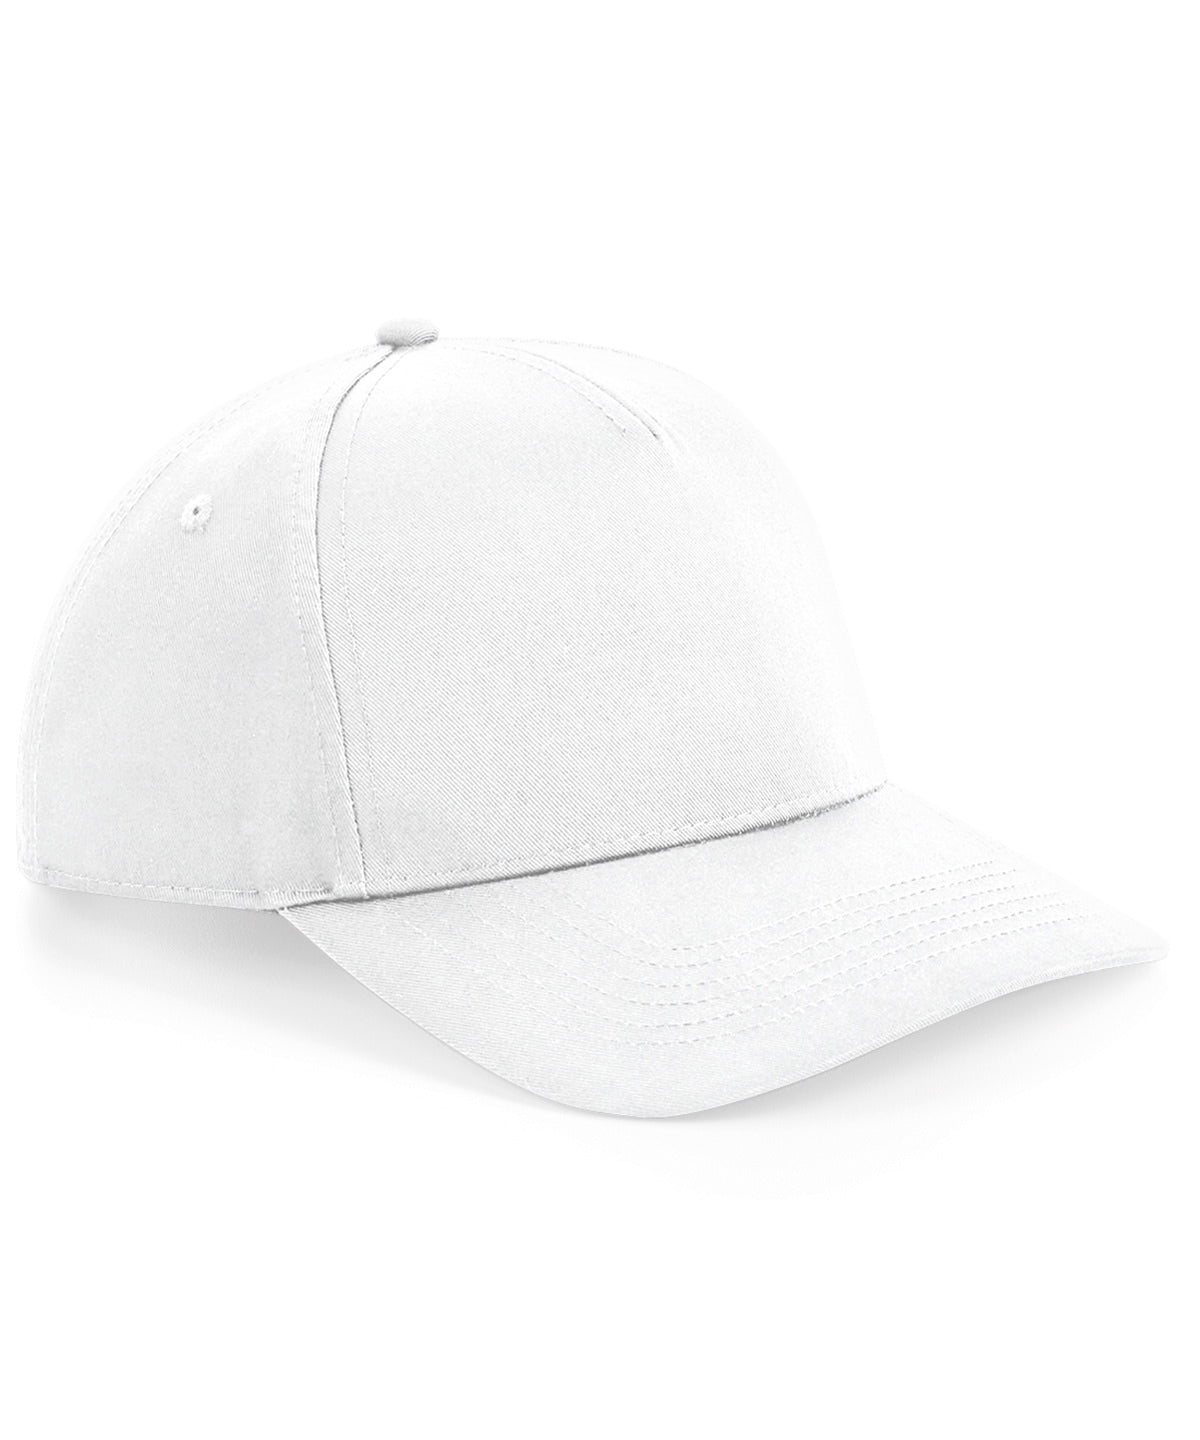 Personalised Caps - White Beechfield Urbanwear 5-panel snapback